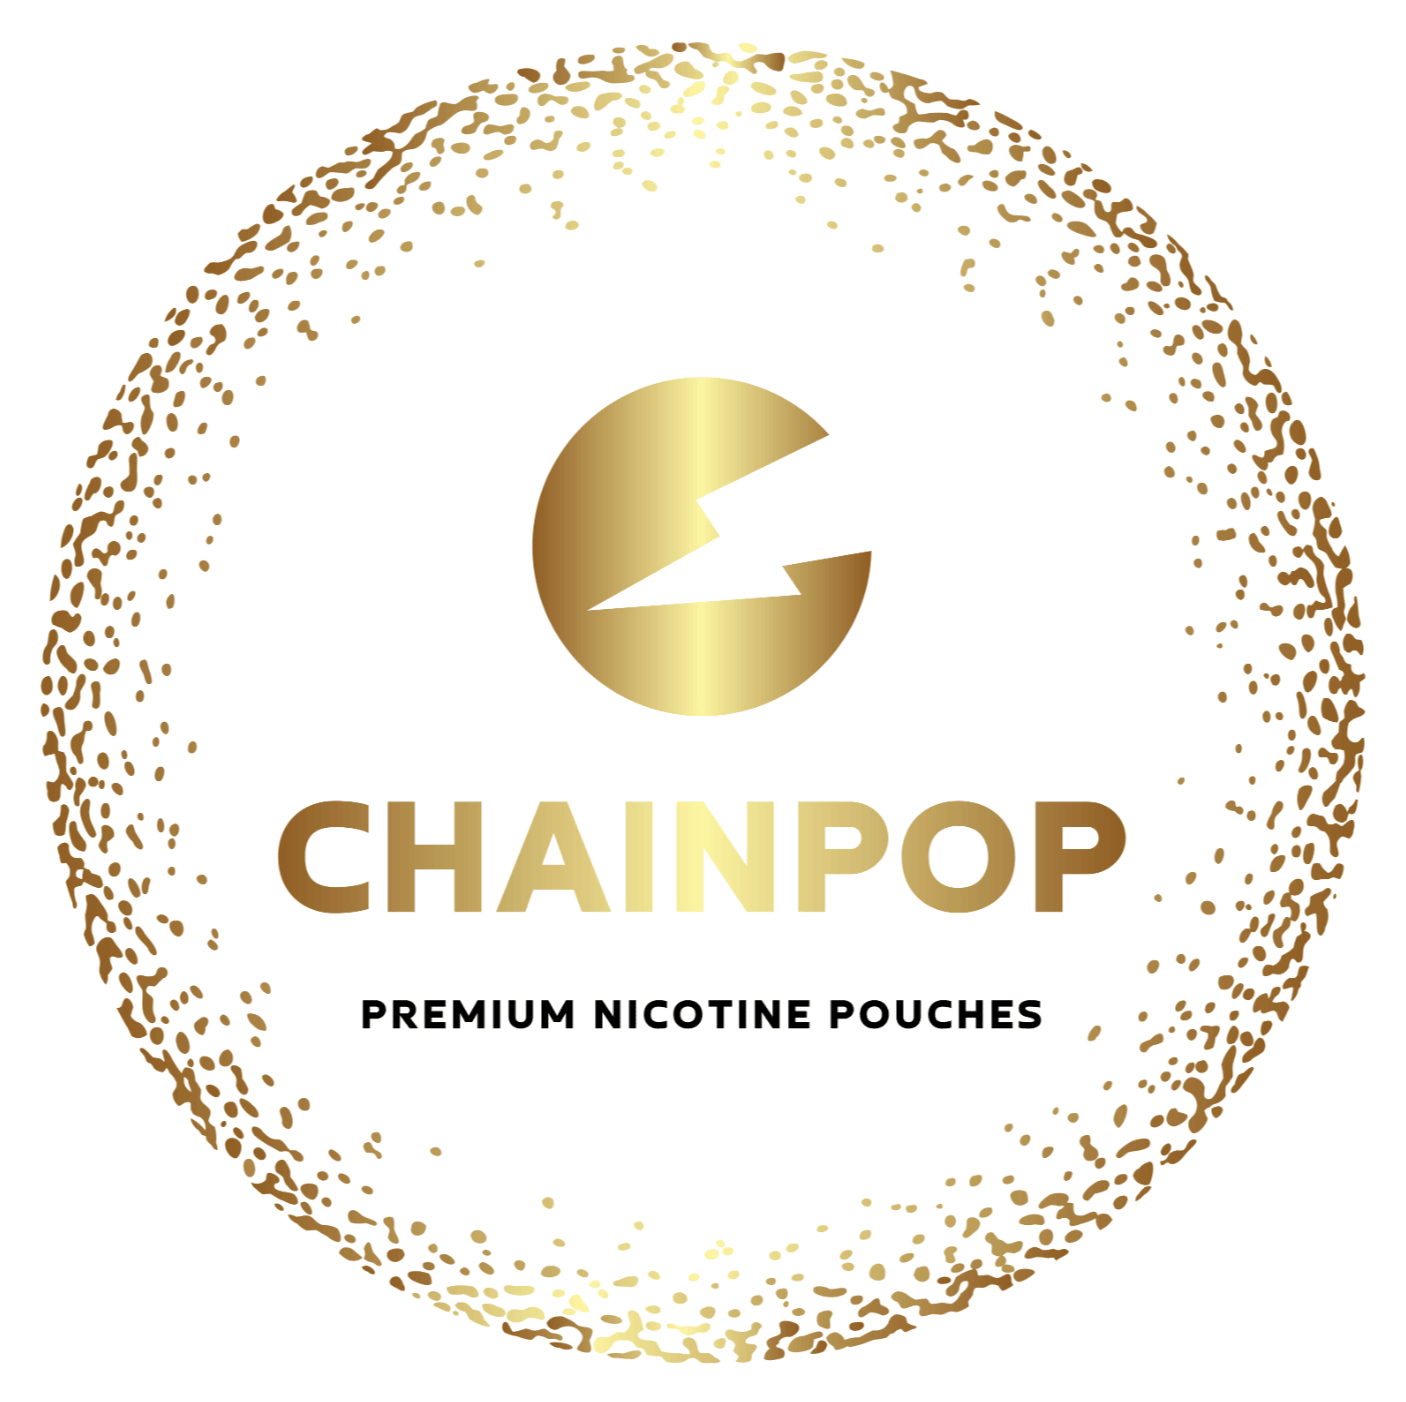 Buste per nicotina Chainpop logo